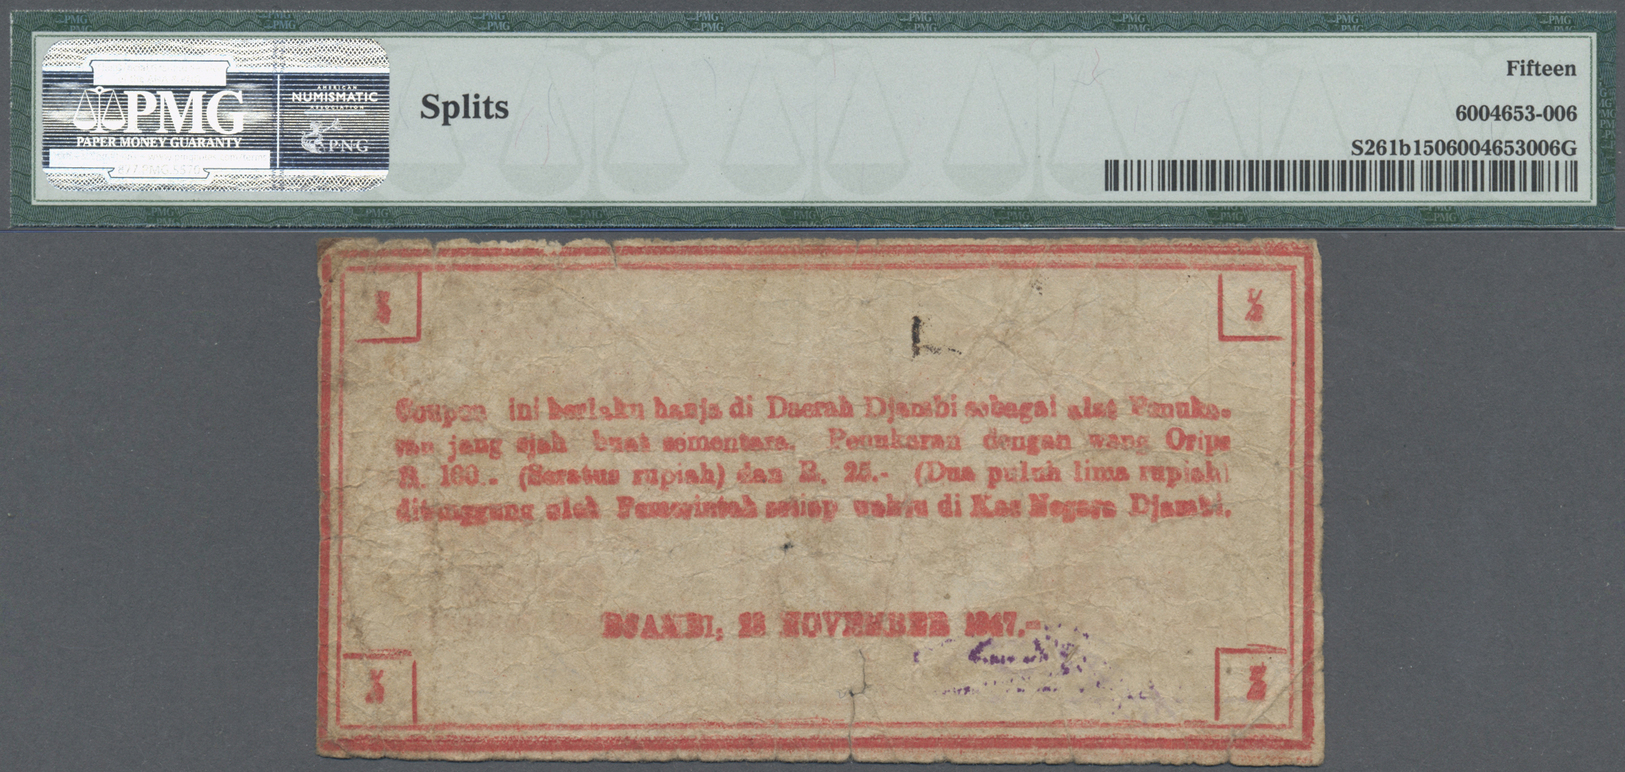 01196 Indonesia / Indonesien: Kas Negara (Central Treasury), Djambi 1/2 Rupiah "Coupon Penukaran" (Redemption Coupon) 19 - Indonesia